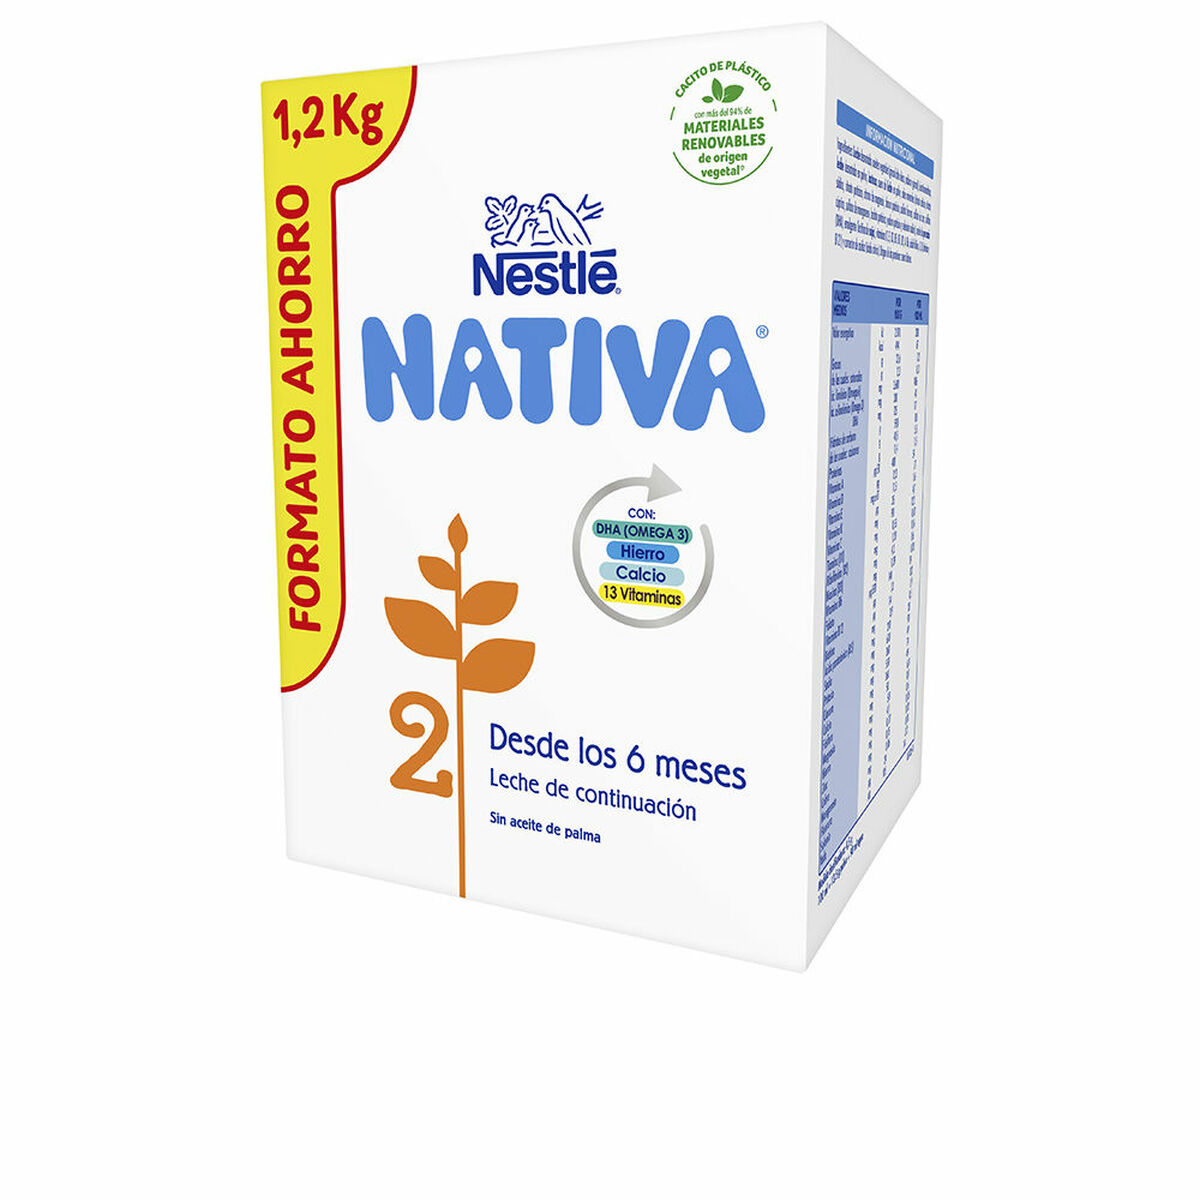 Powdered Milk Nestlé Nativa Nativa2 1,2 kg